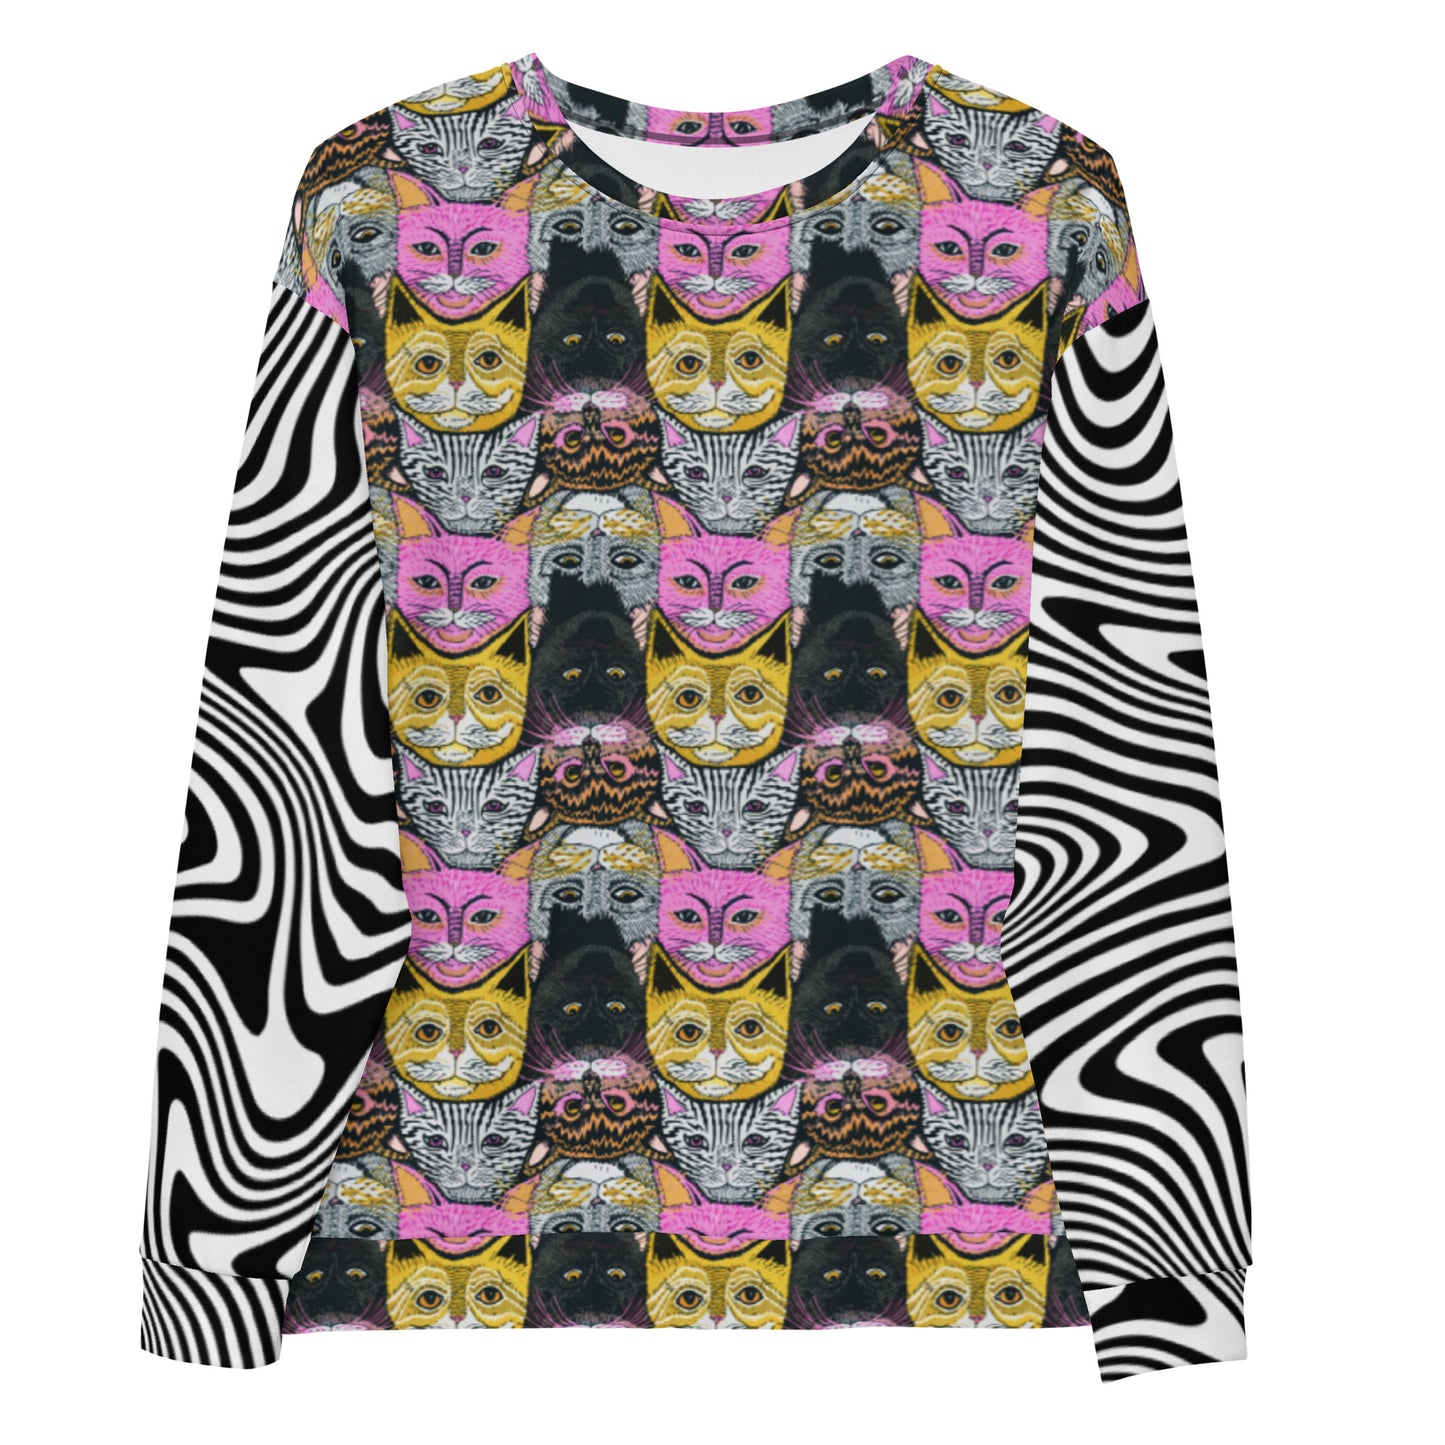 It's Cats Unisex Sweatshirt